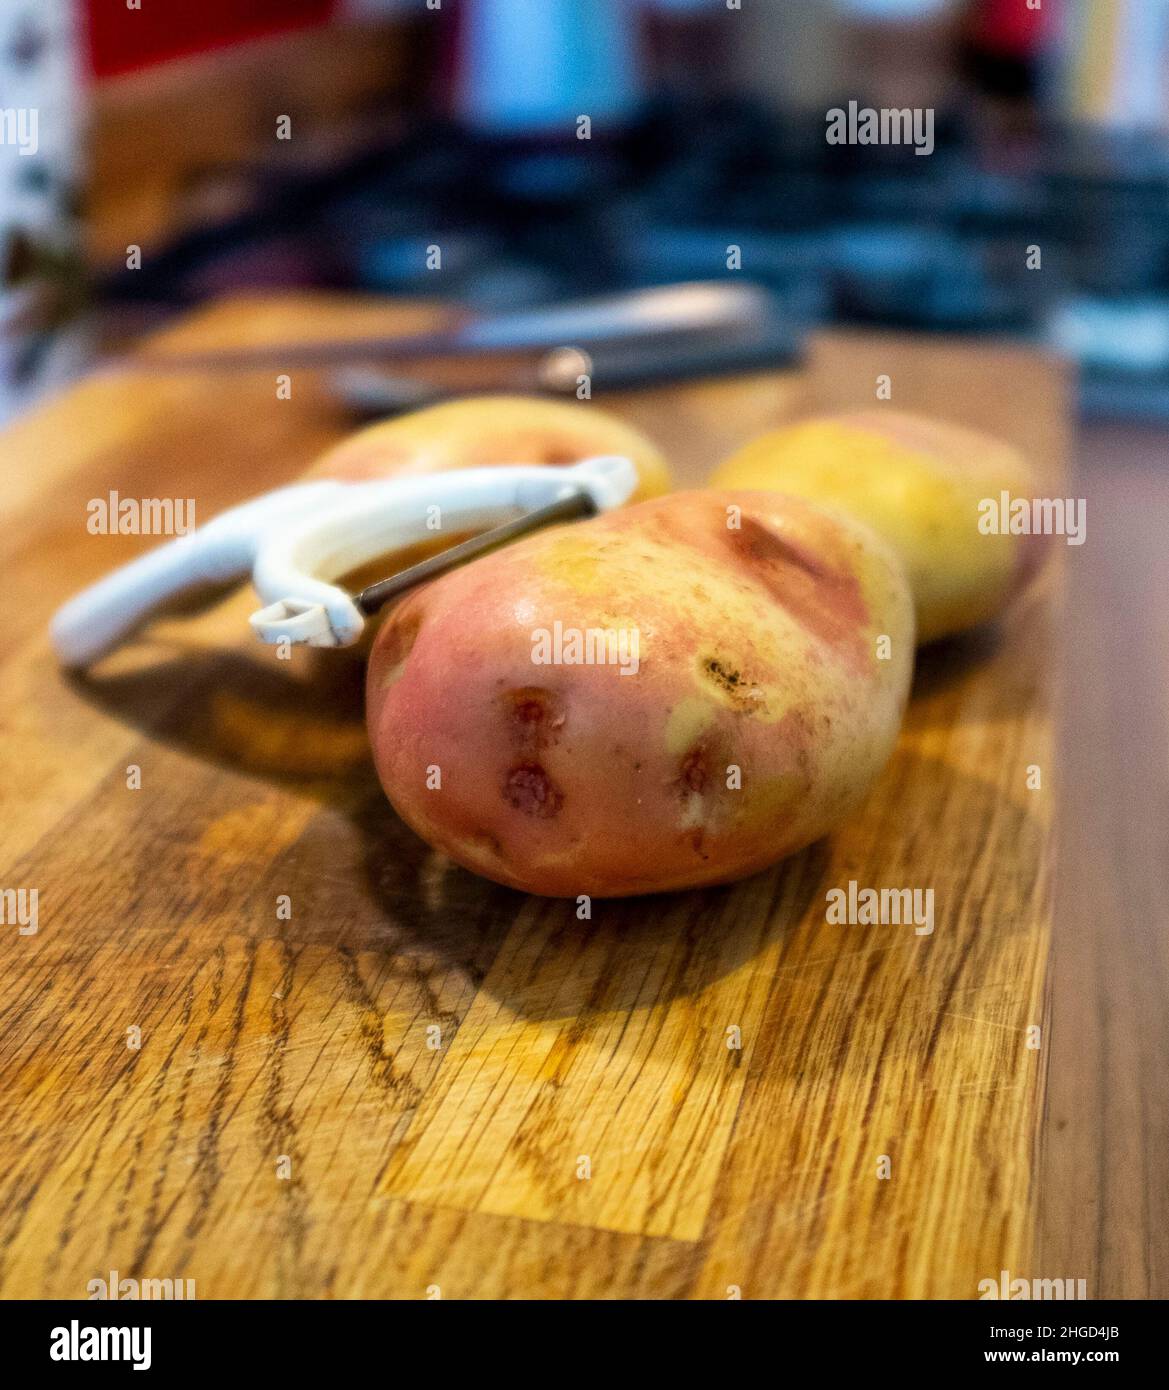 King Edward potatoes ready for peeling and cooking UK Stock Photo